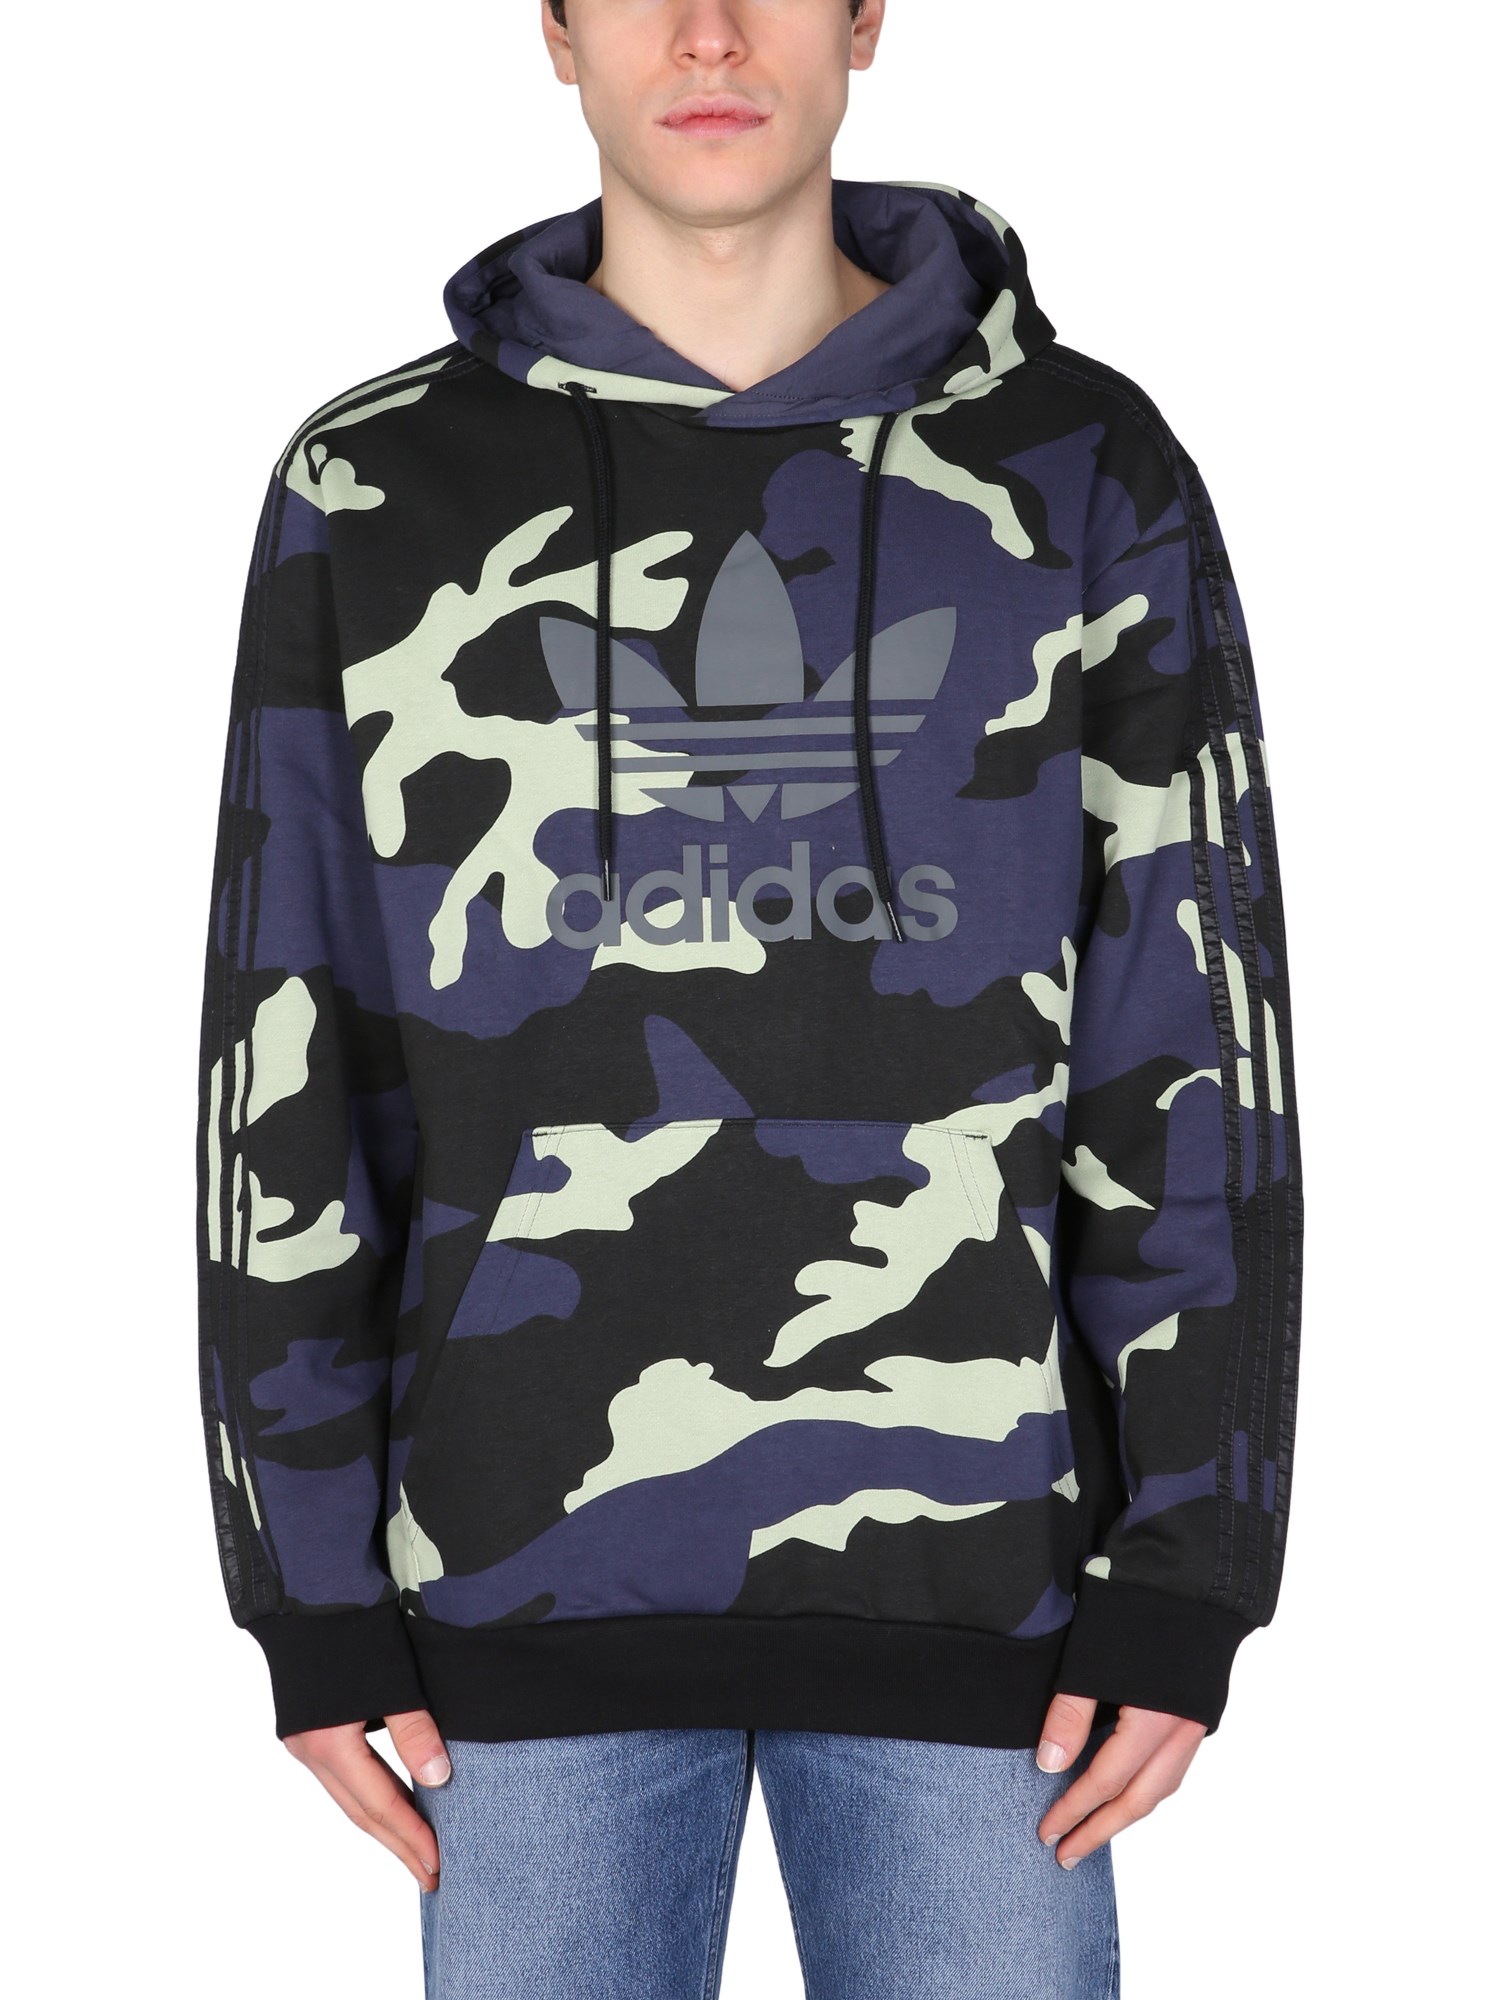 adidas originals sweatshirt with camouflage graphic print